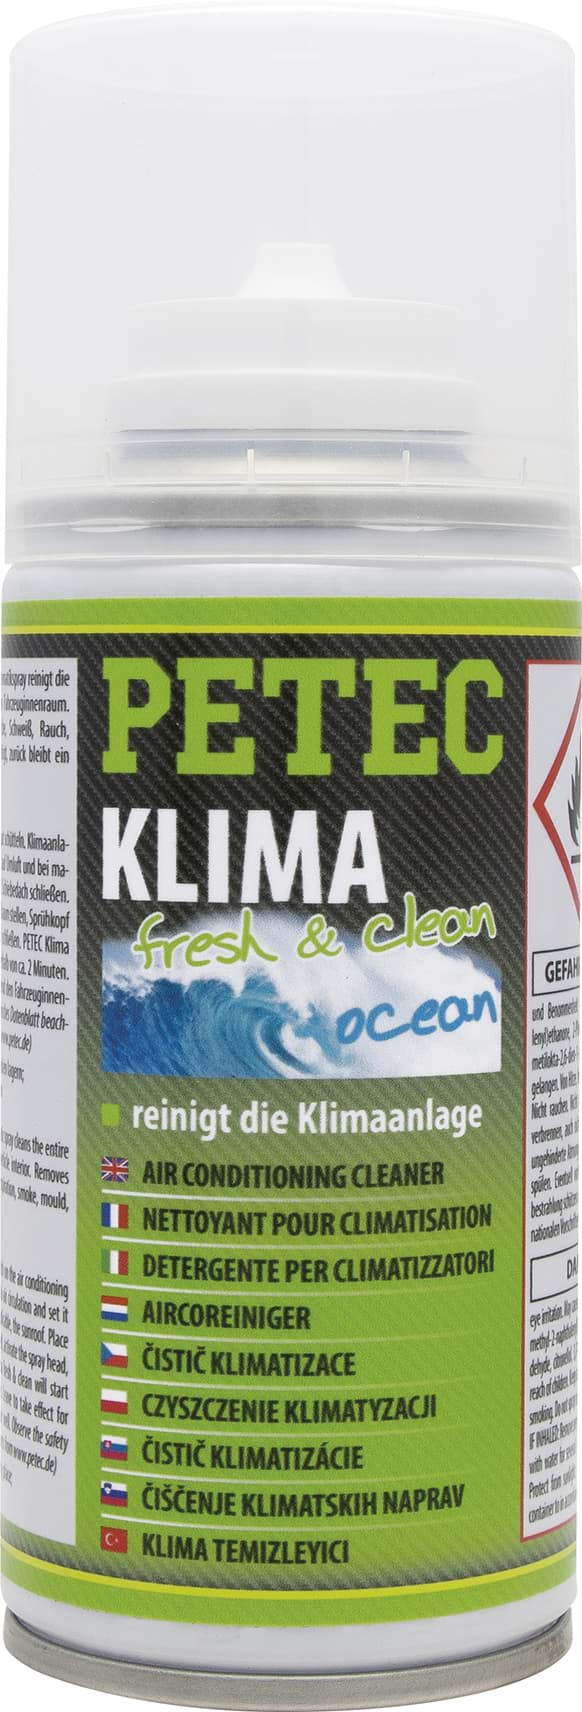 Petec KLIMA FRESH & CLEAN OCEAN AUTOMATIKSPRAY resmi